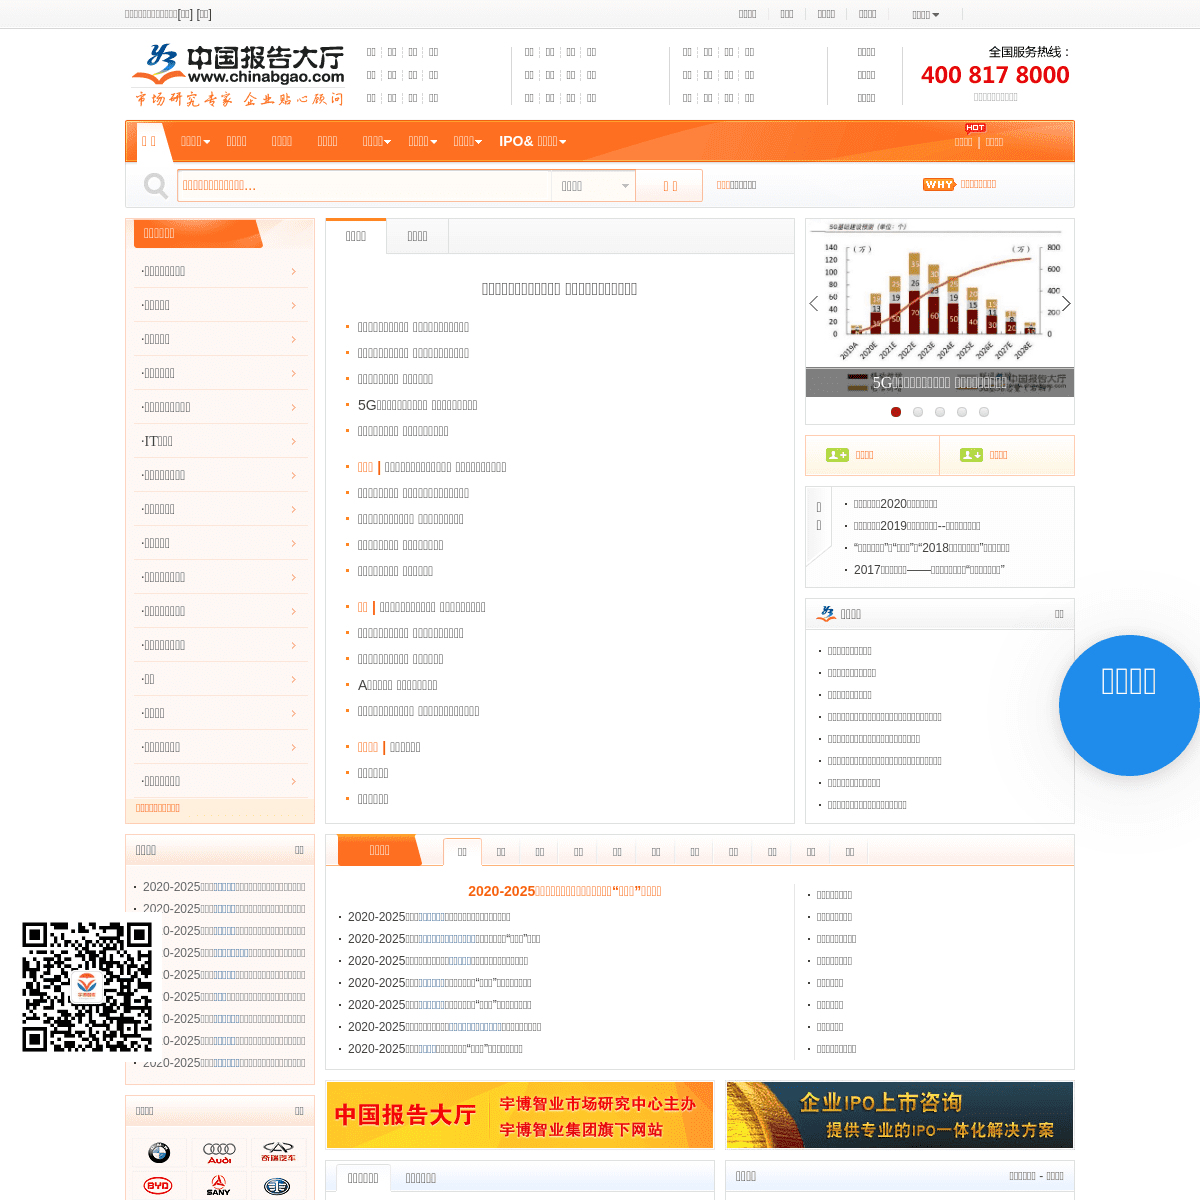 A complete backup of chinabgao.com